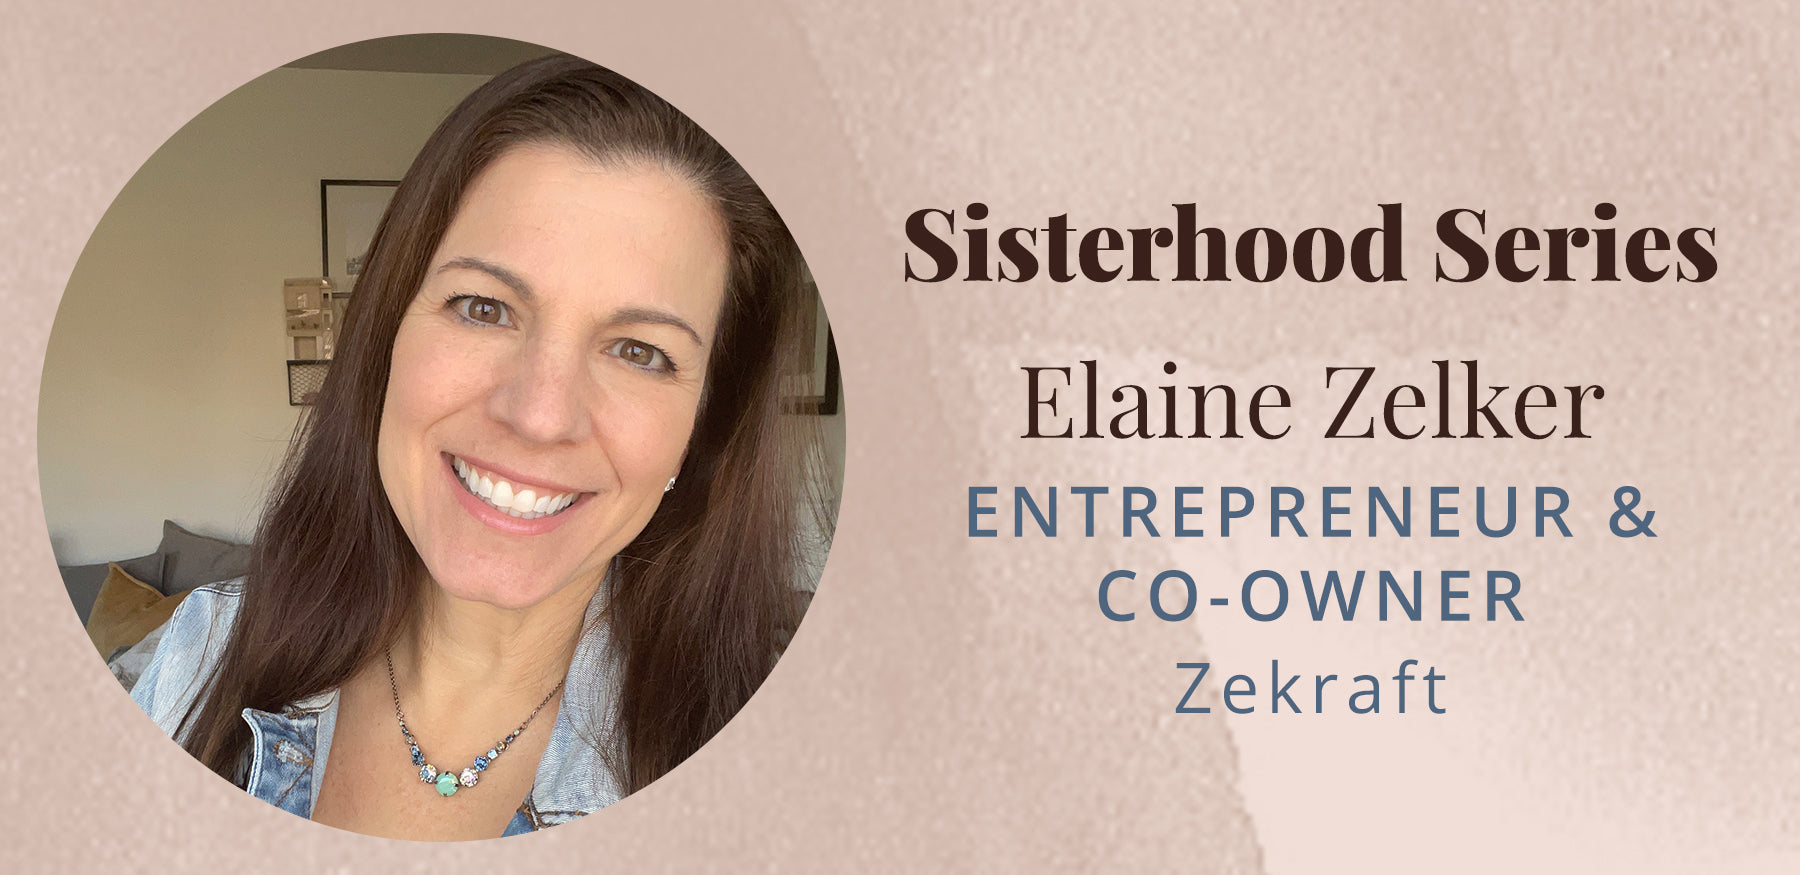 Sisterhood Series with Elaine Zelker